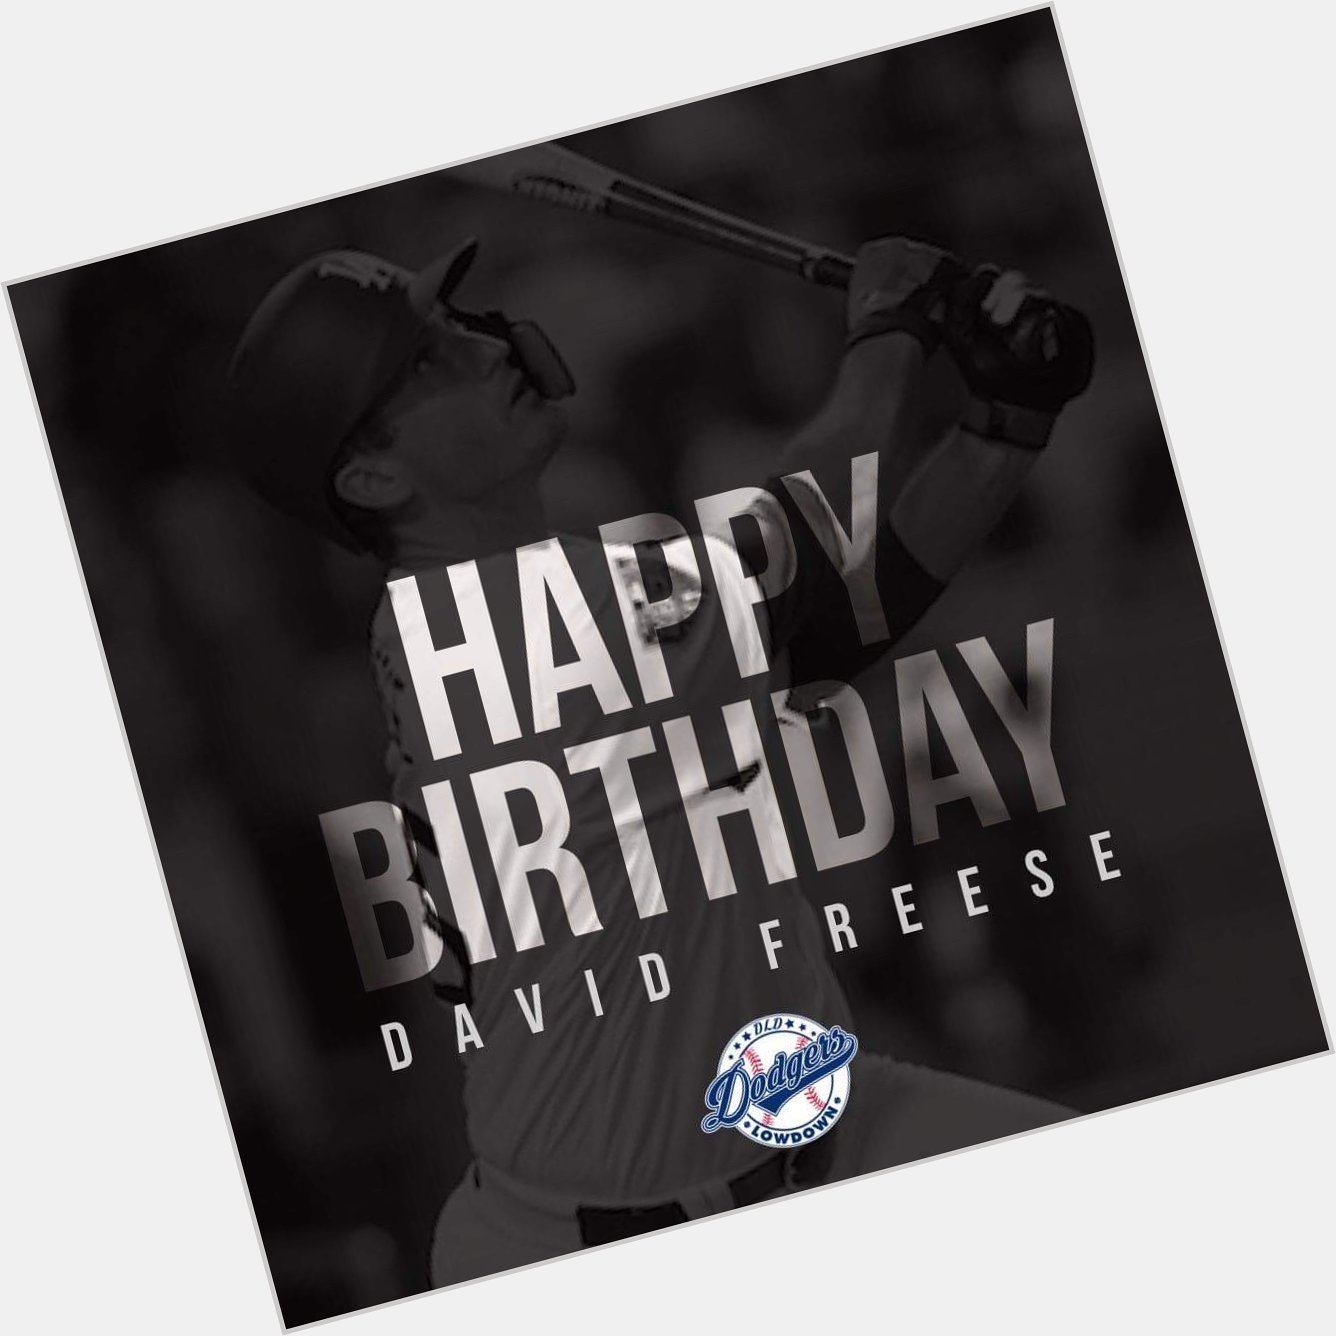  Happy Birthday David Freese to wish a Happy Birthday! 